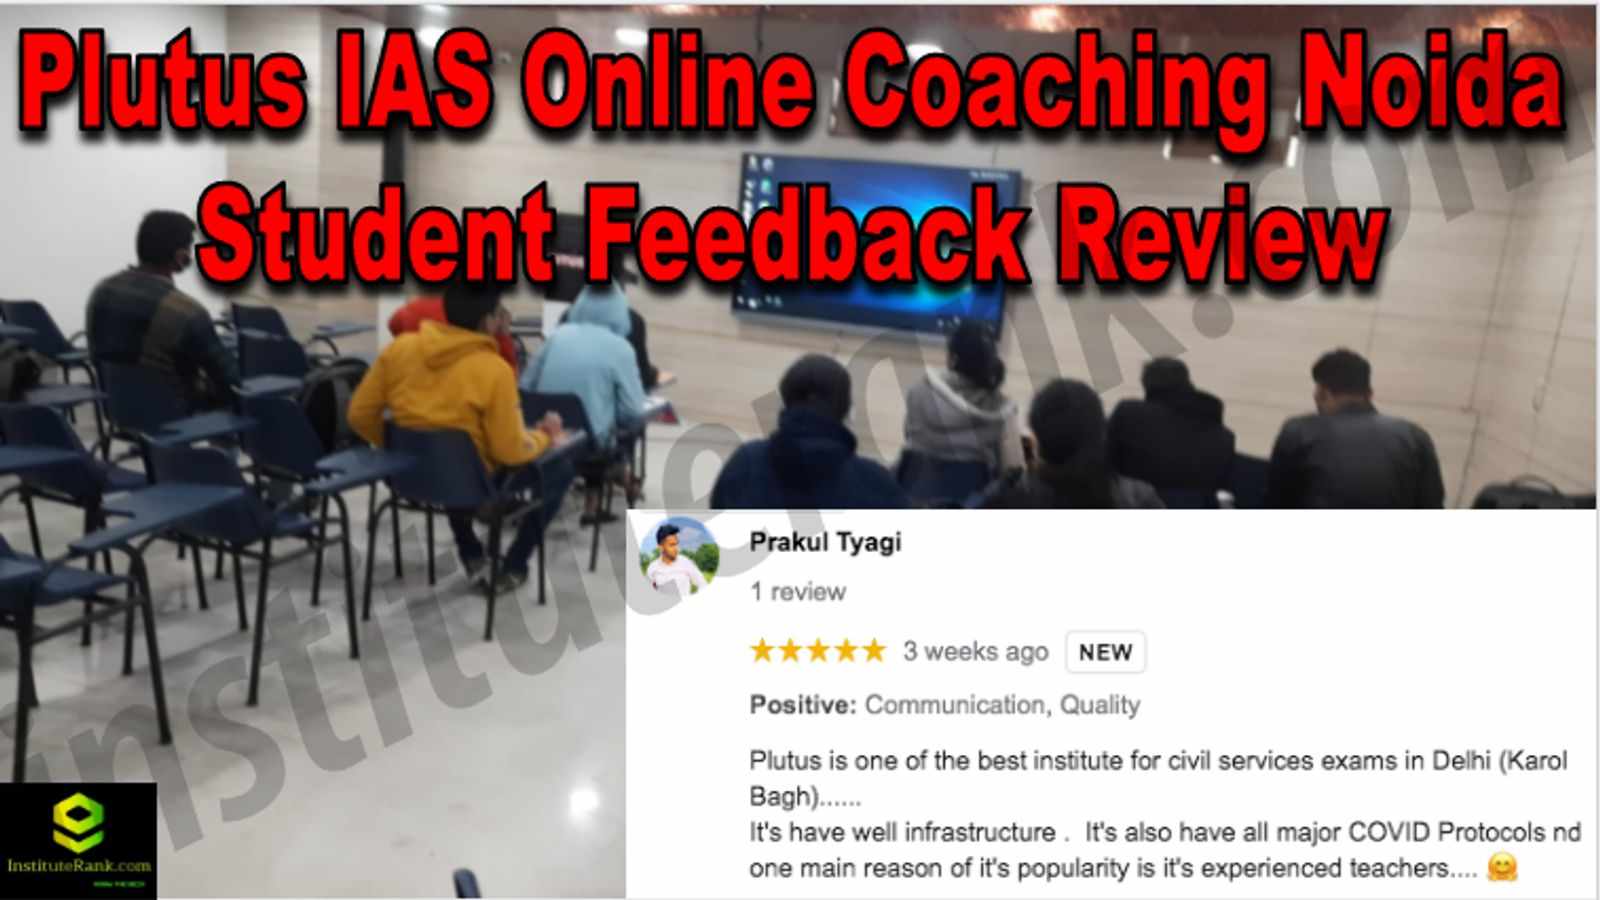 Plutus IAS Online Coaching Noida Student Feedback Reviews